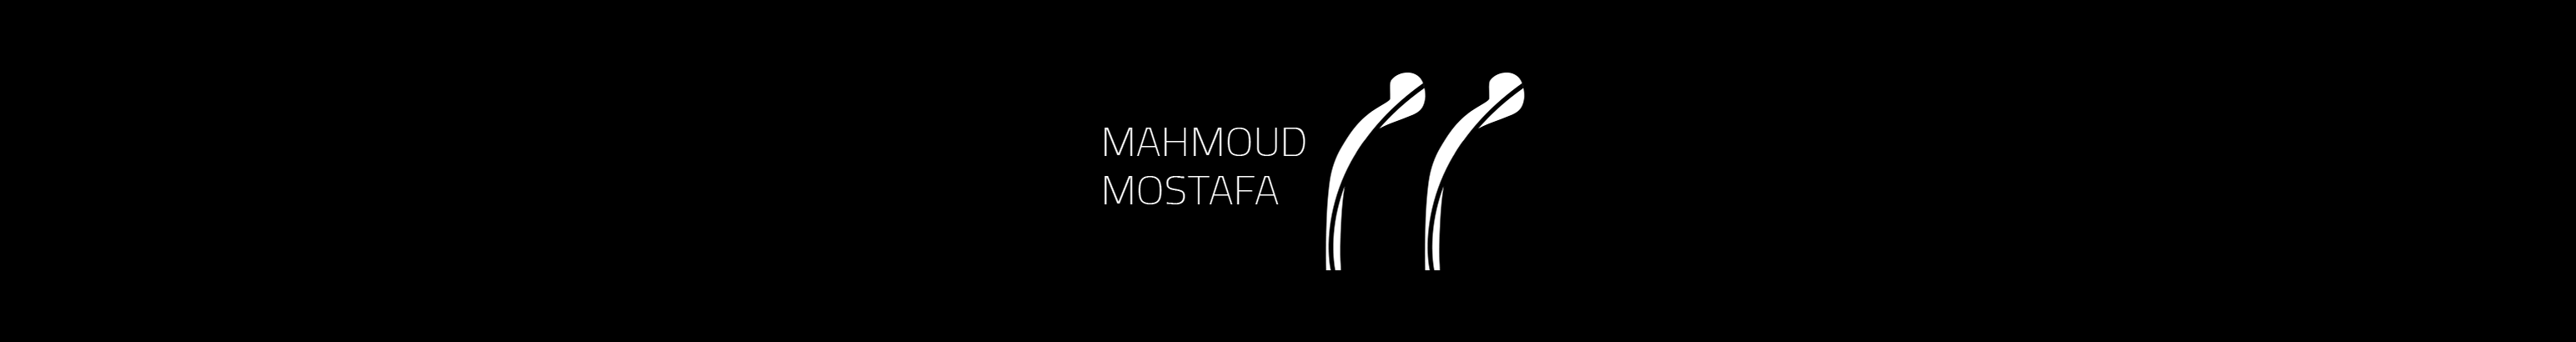 mahmoud mostafa's profile banner